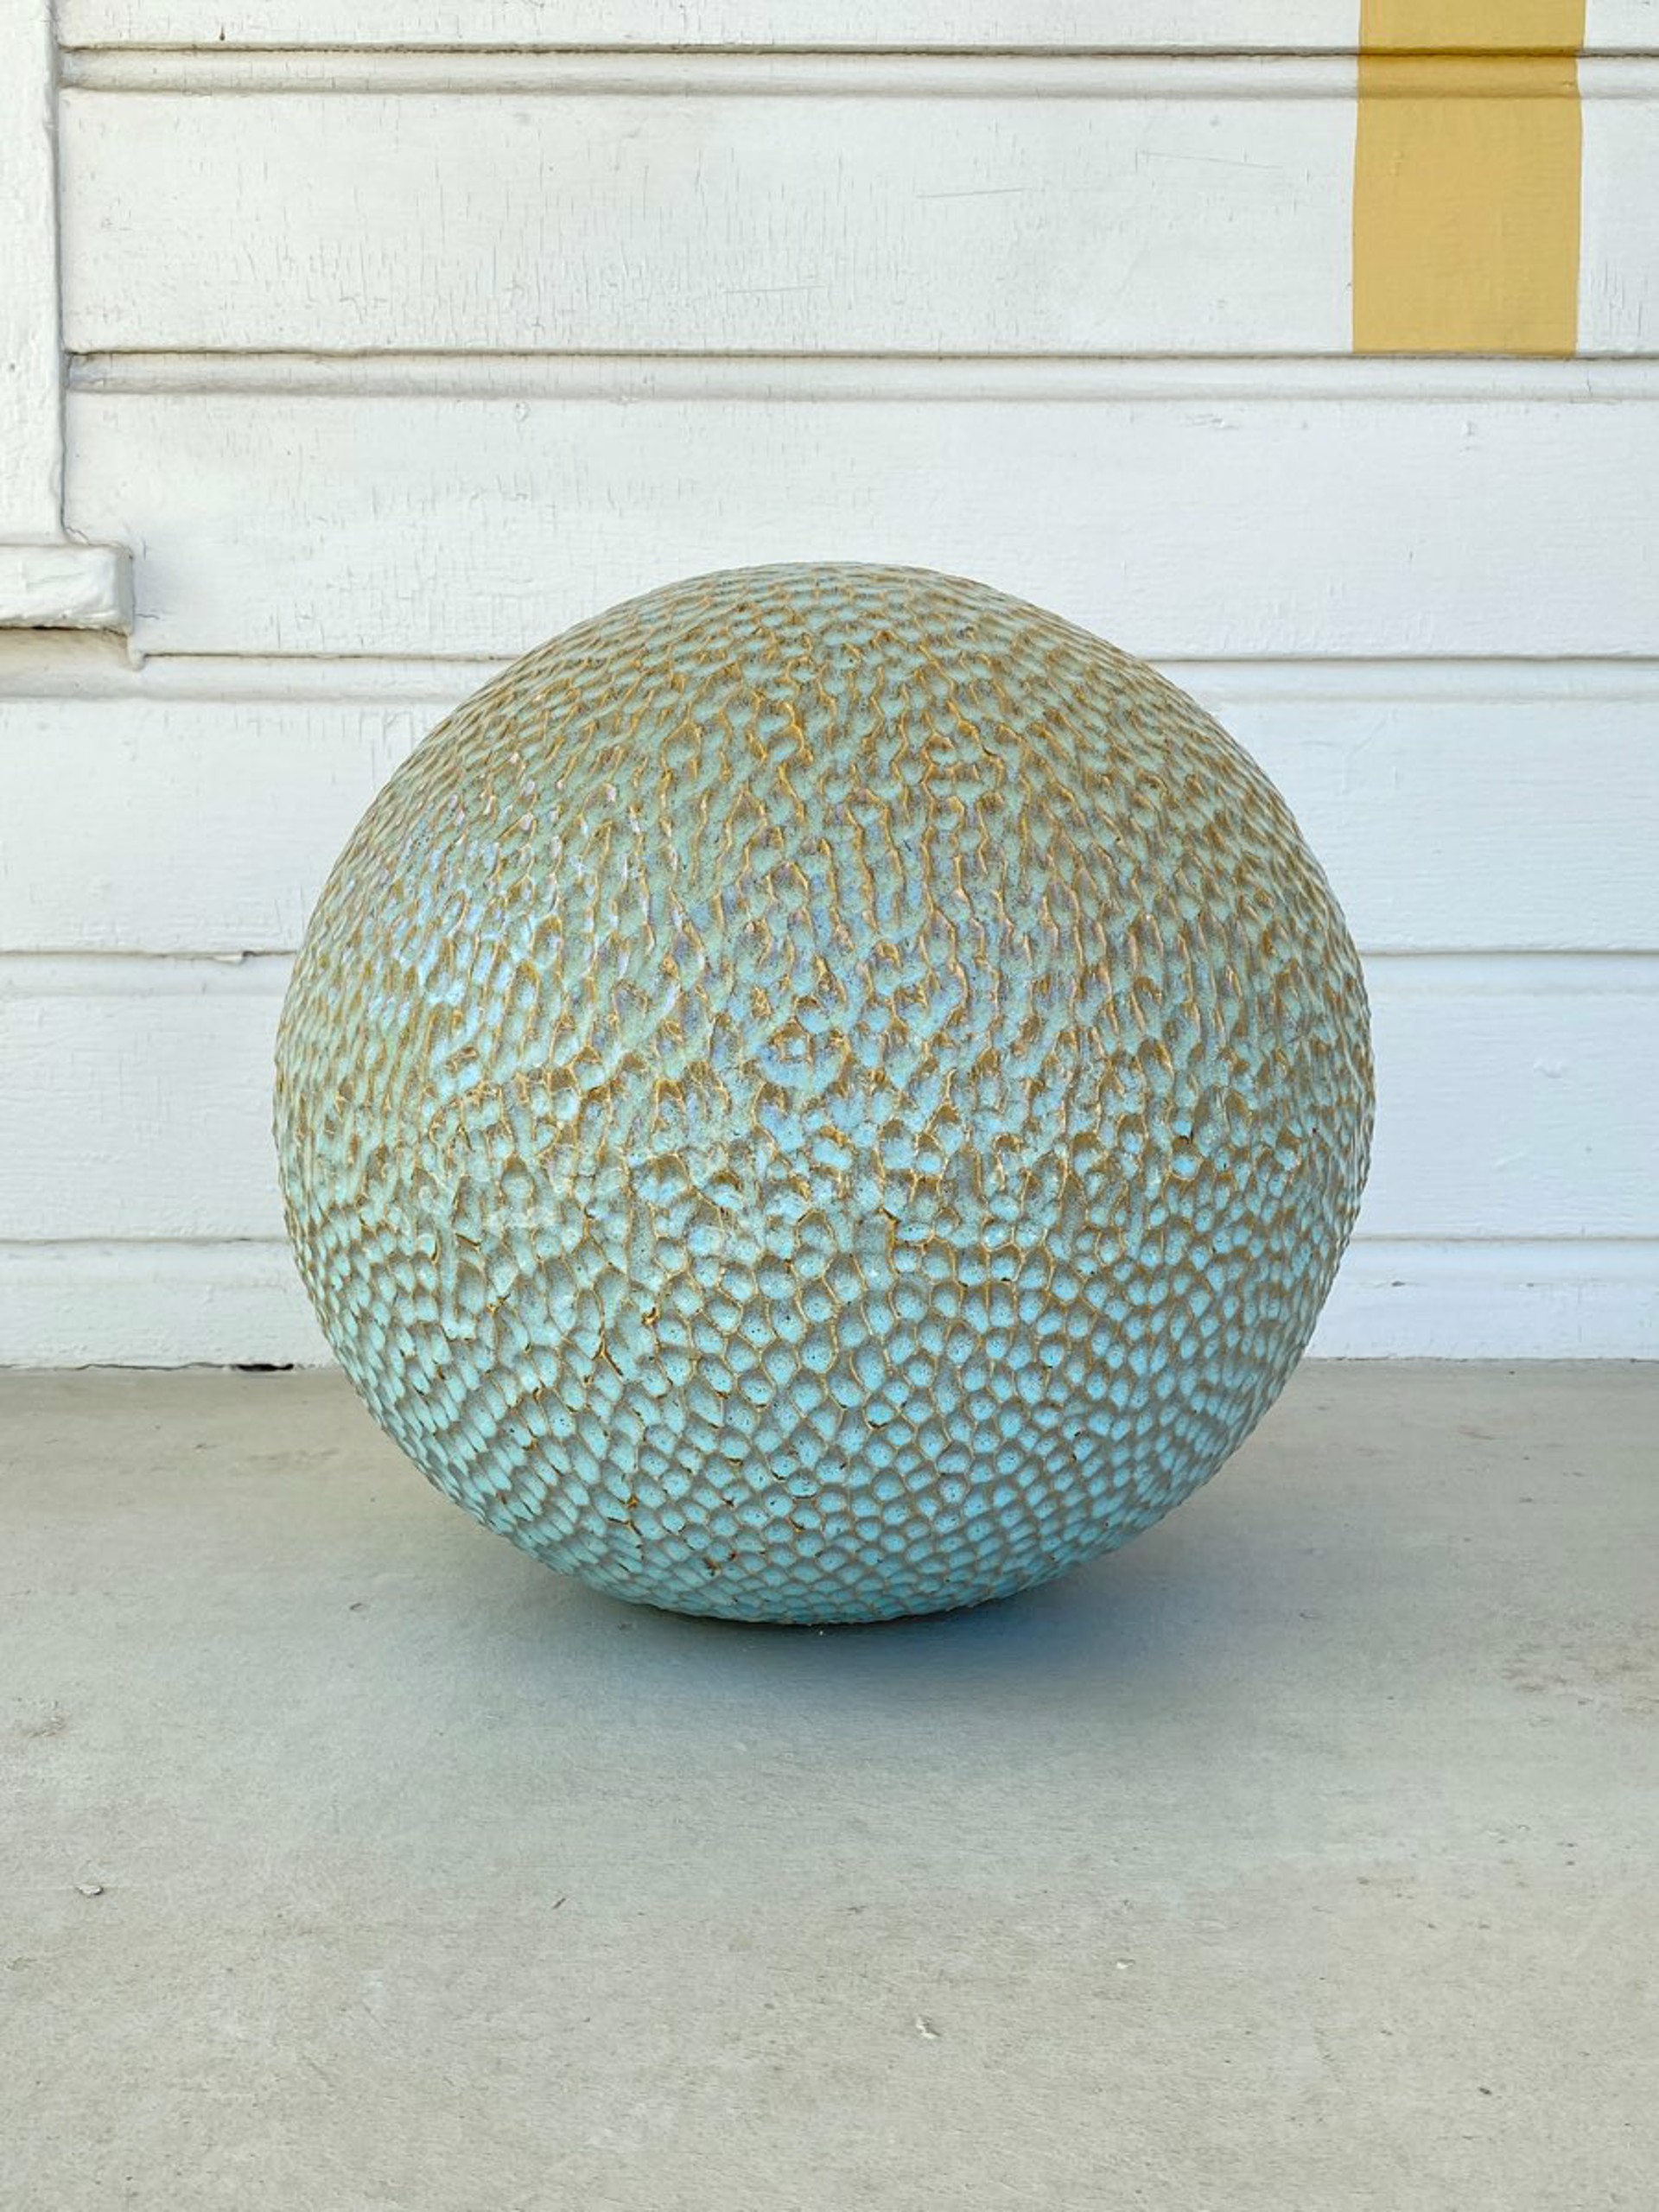 Medium Sphere by Virginia Scotchie